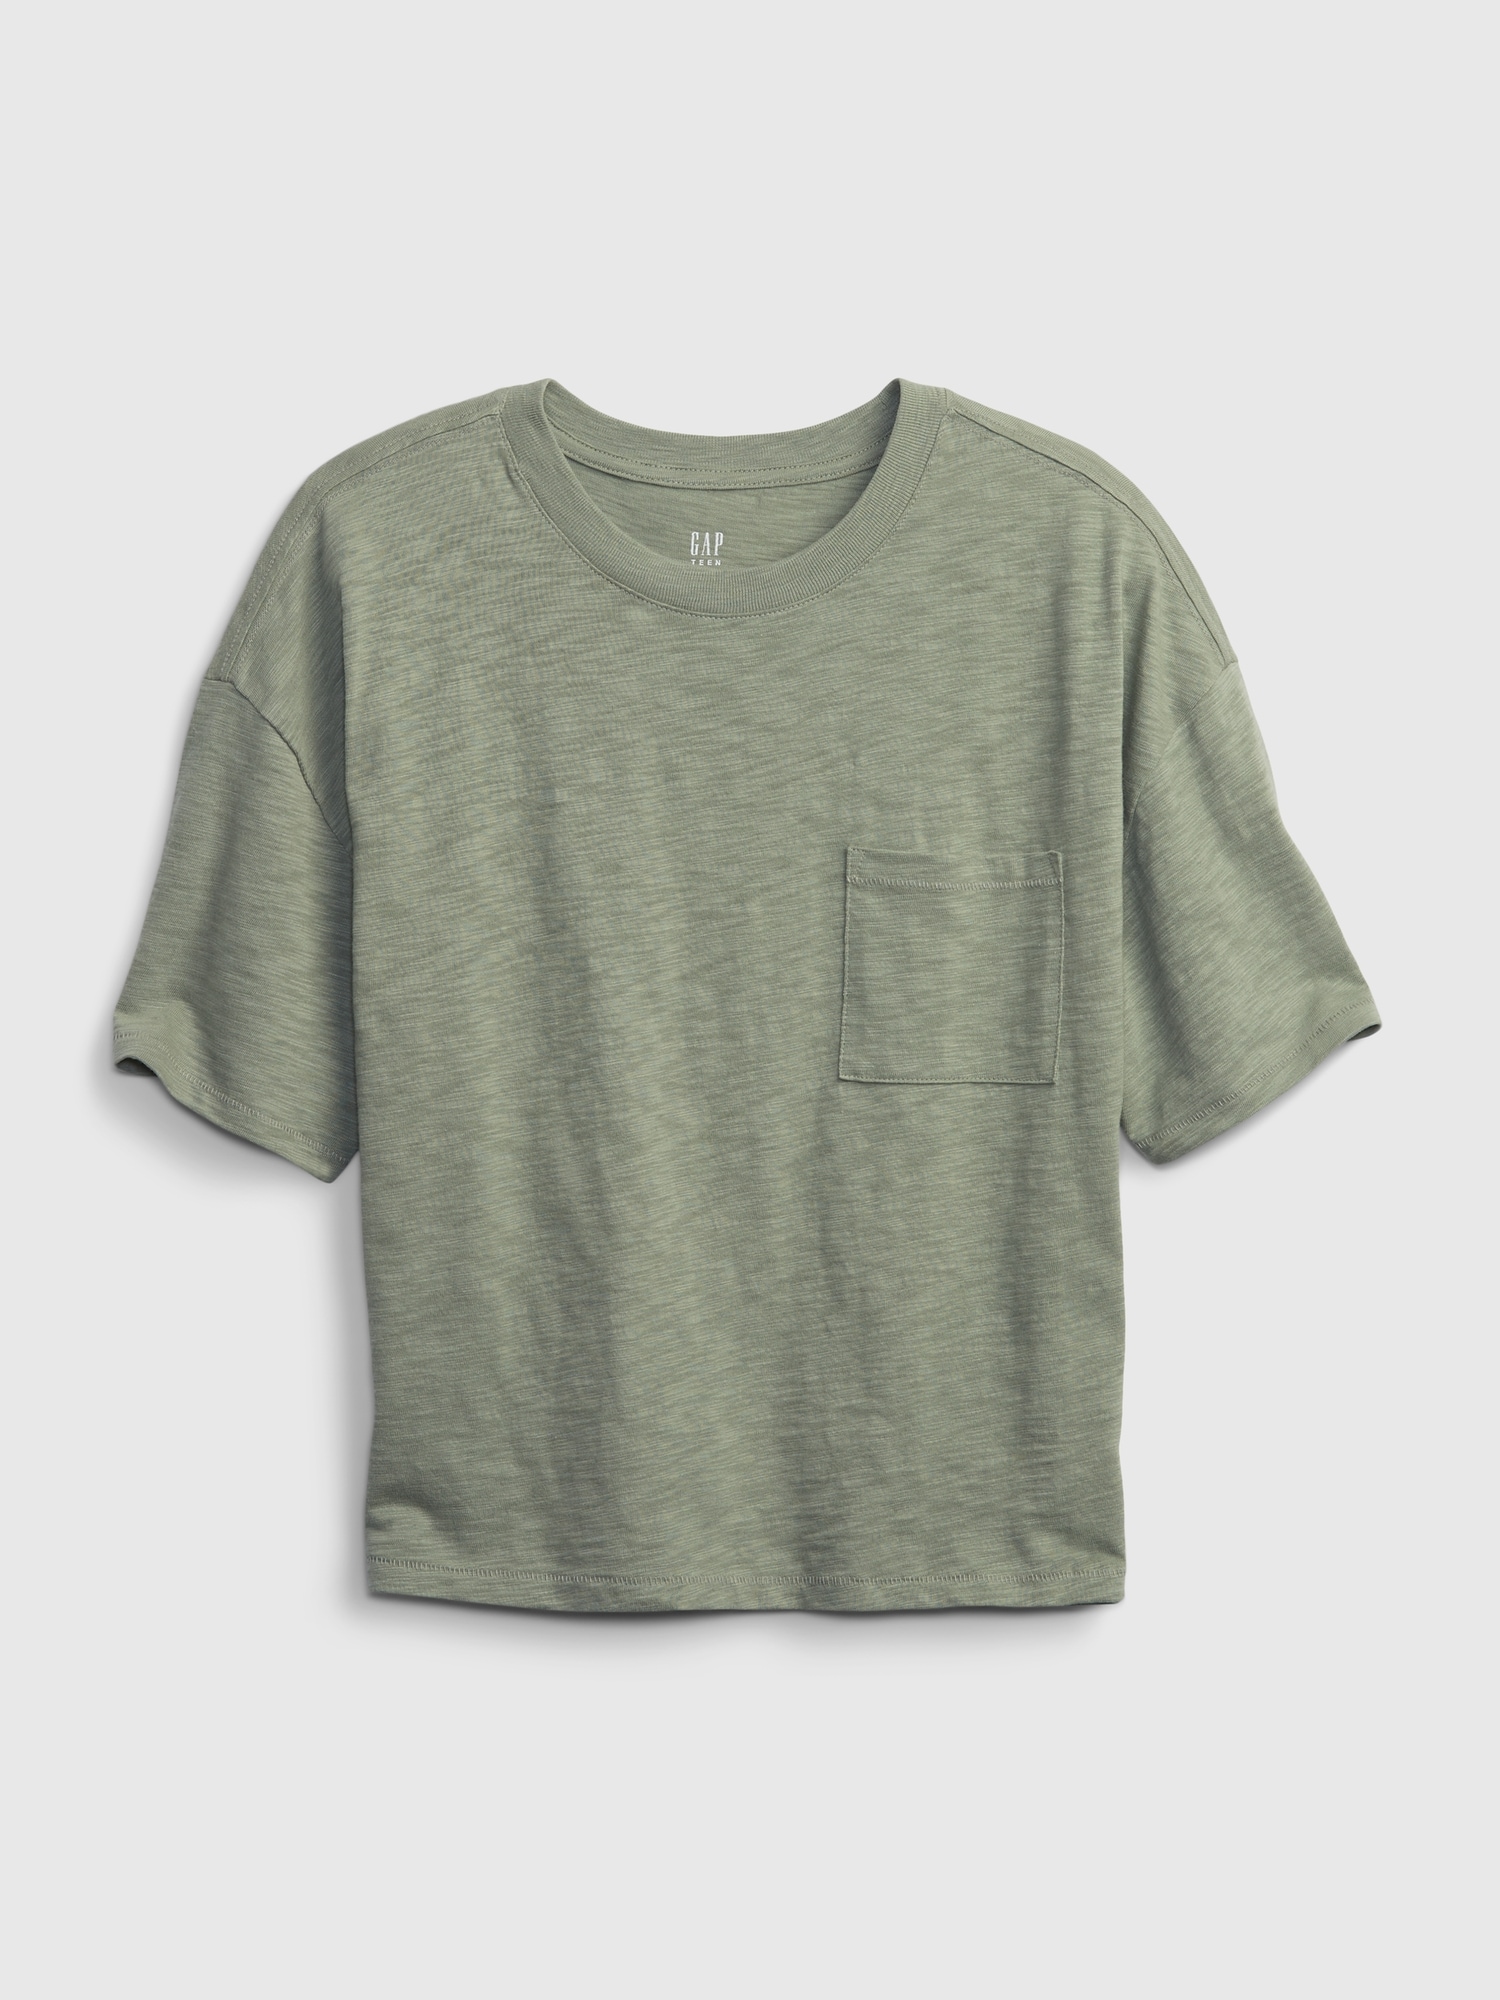 GAP Teen T-shirt organic with pocket - Girls